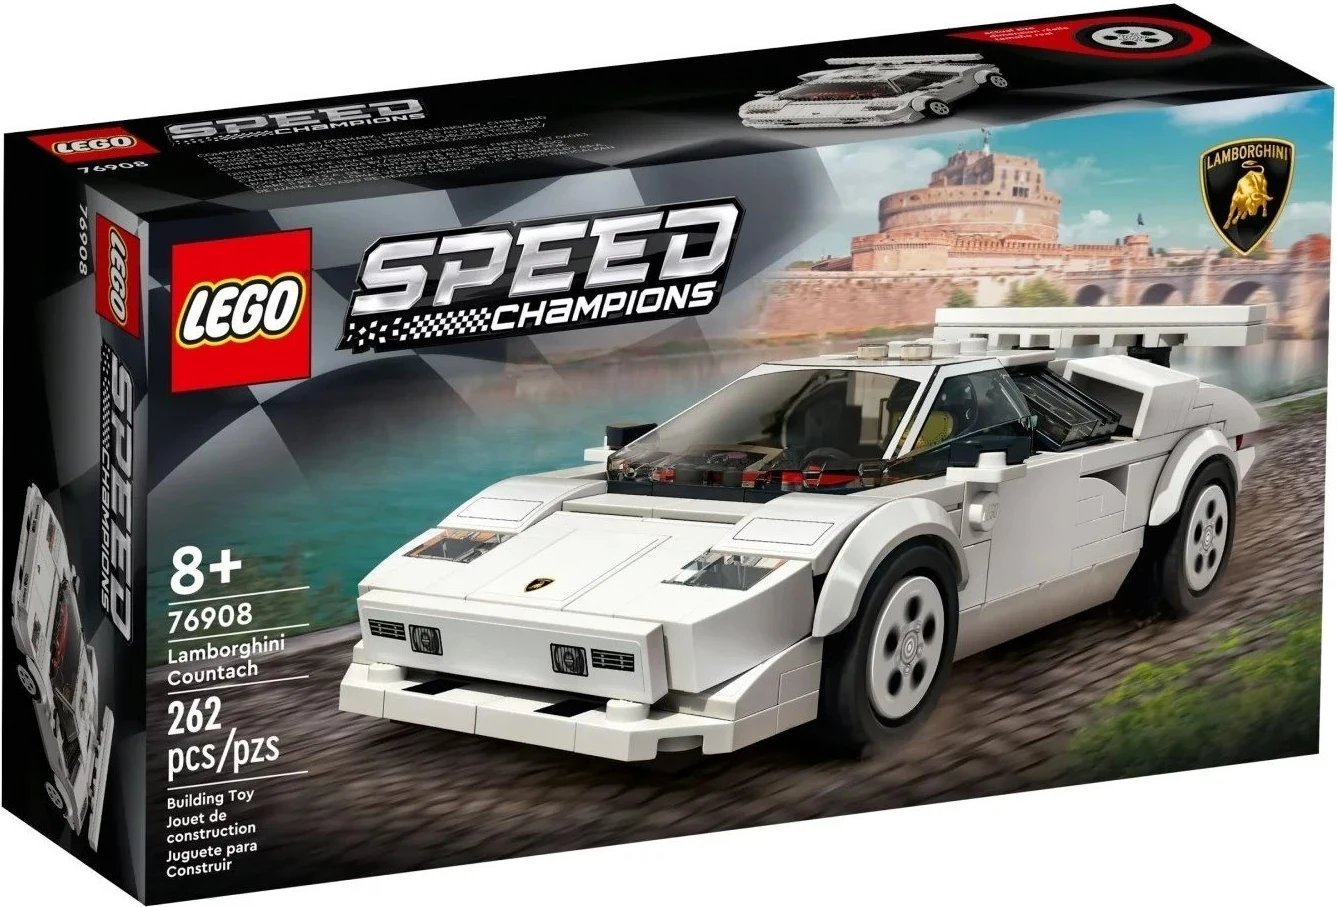 Set lodër LEGO, Lamborghini Countach 76908 